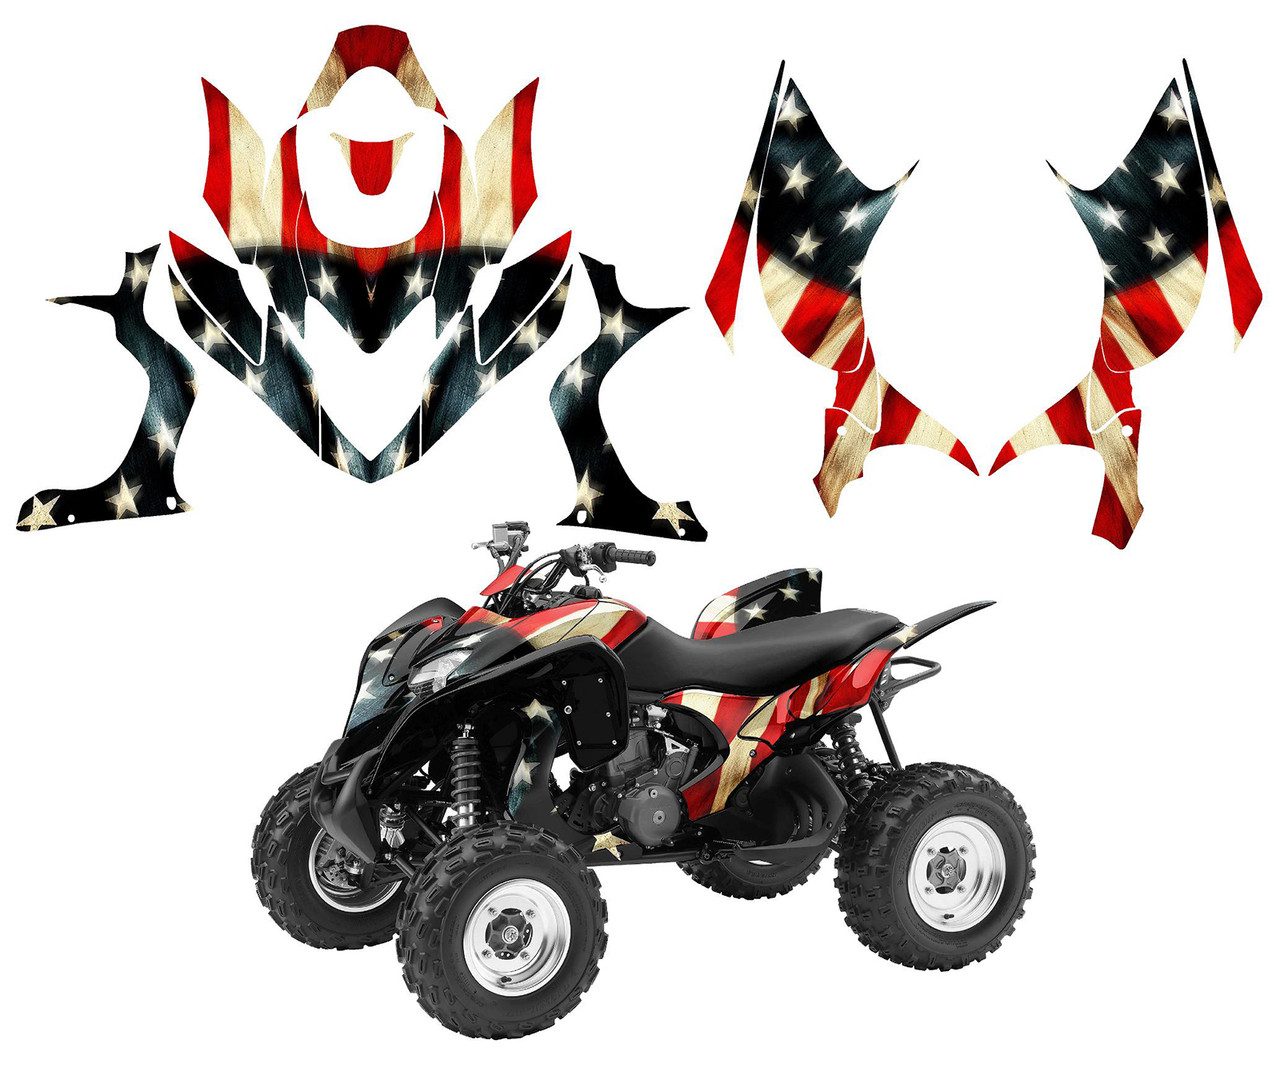 Tattered American Flag graphics for Honda TRX700xx quad